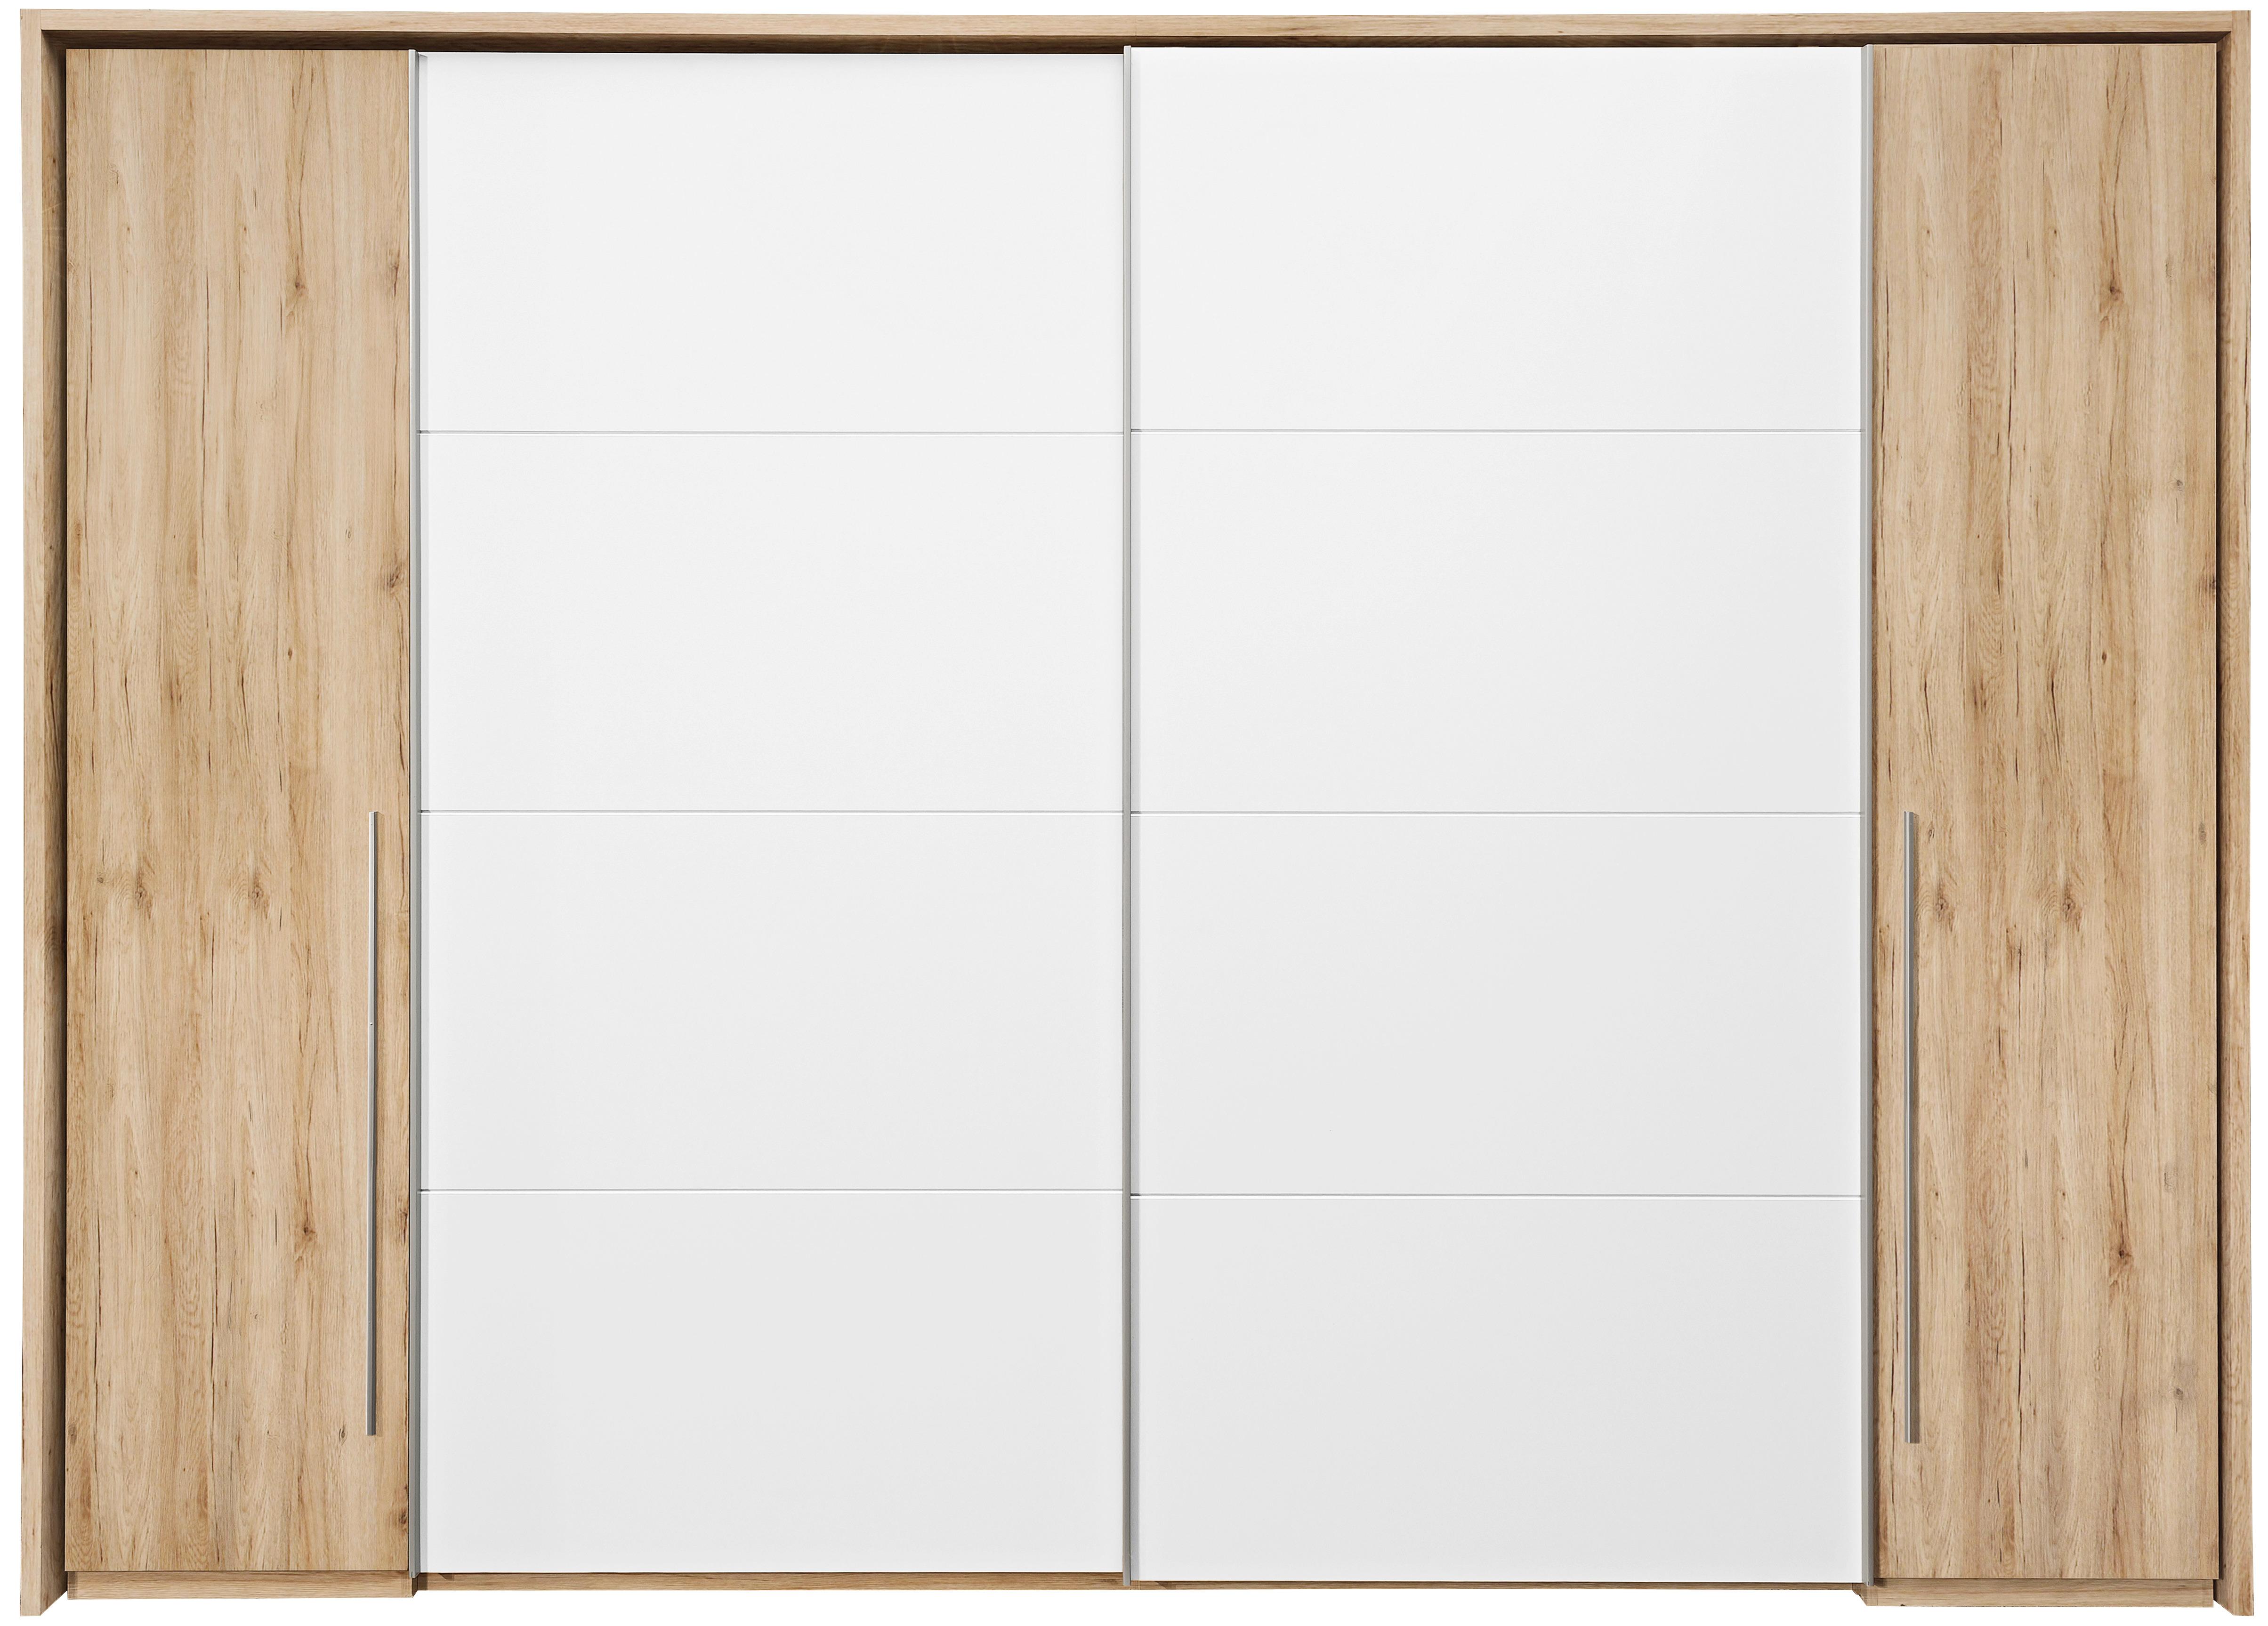 Skříň S Posuvnými Dveřmi Joker,šířka 270cm - bílá/barvy dubu, Konvenční, dřevo/plast (270/225/61cm)